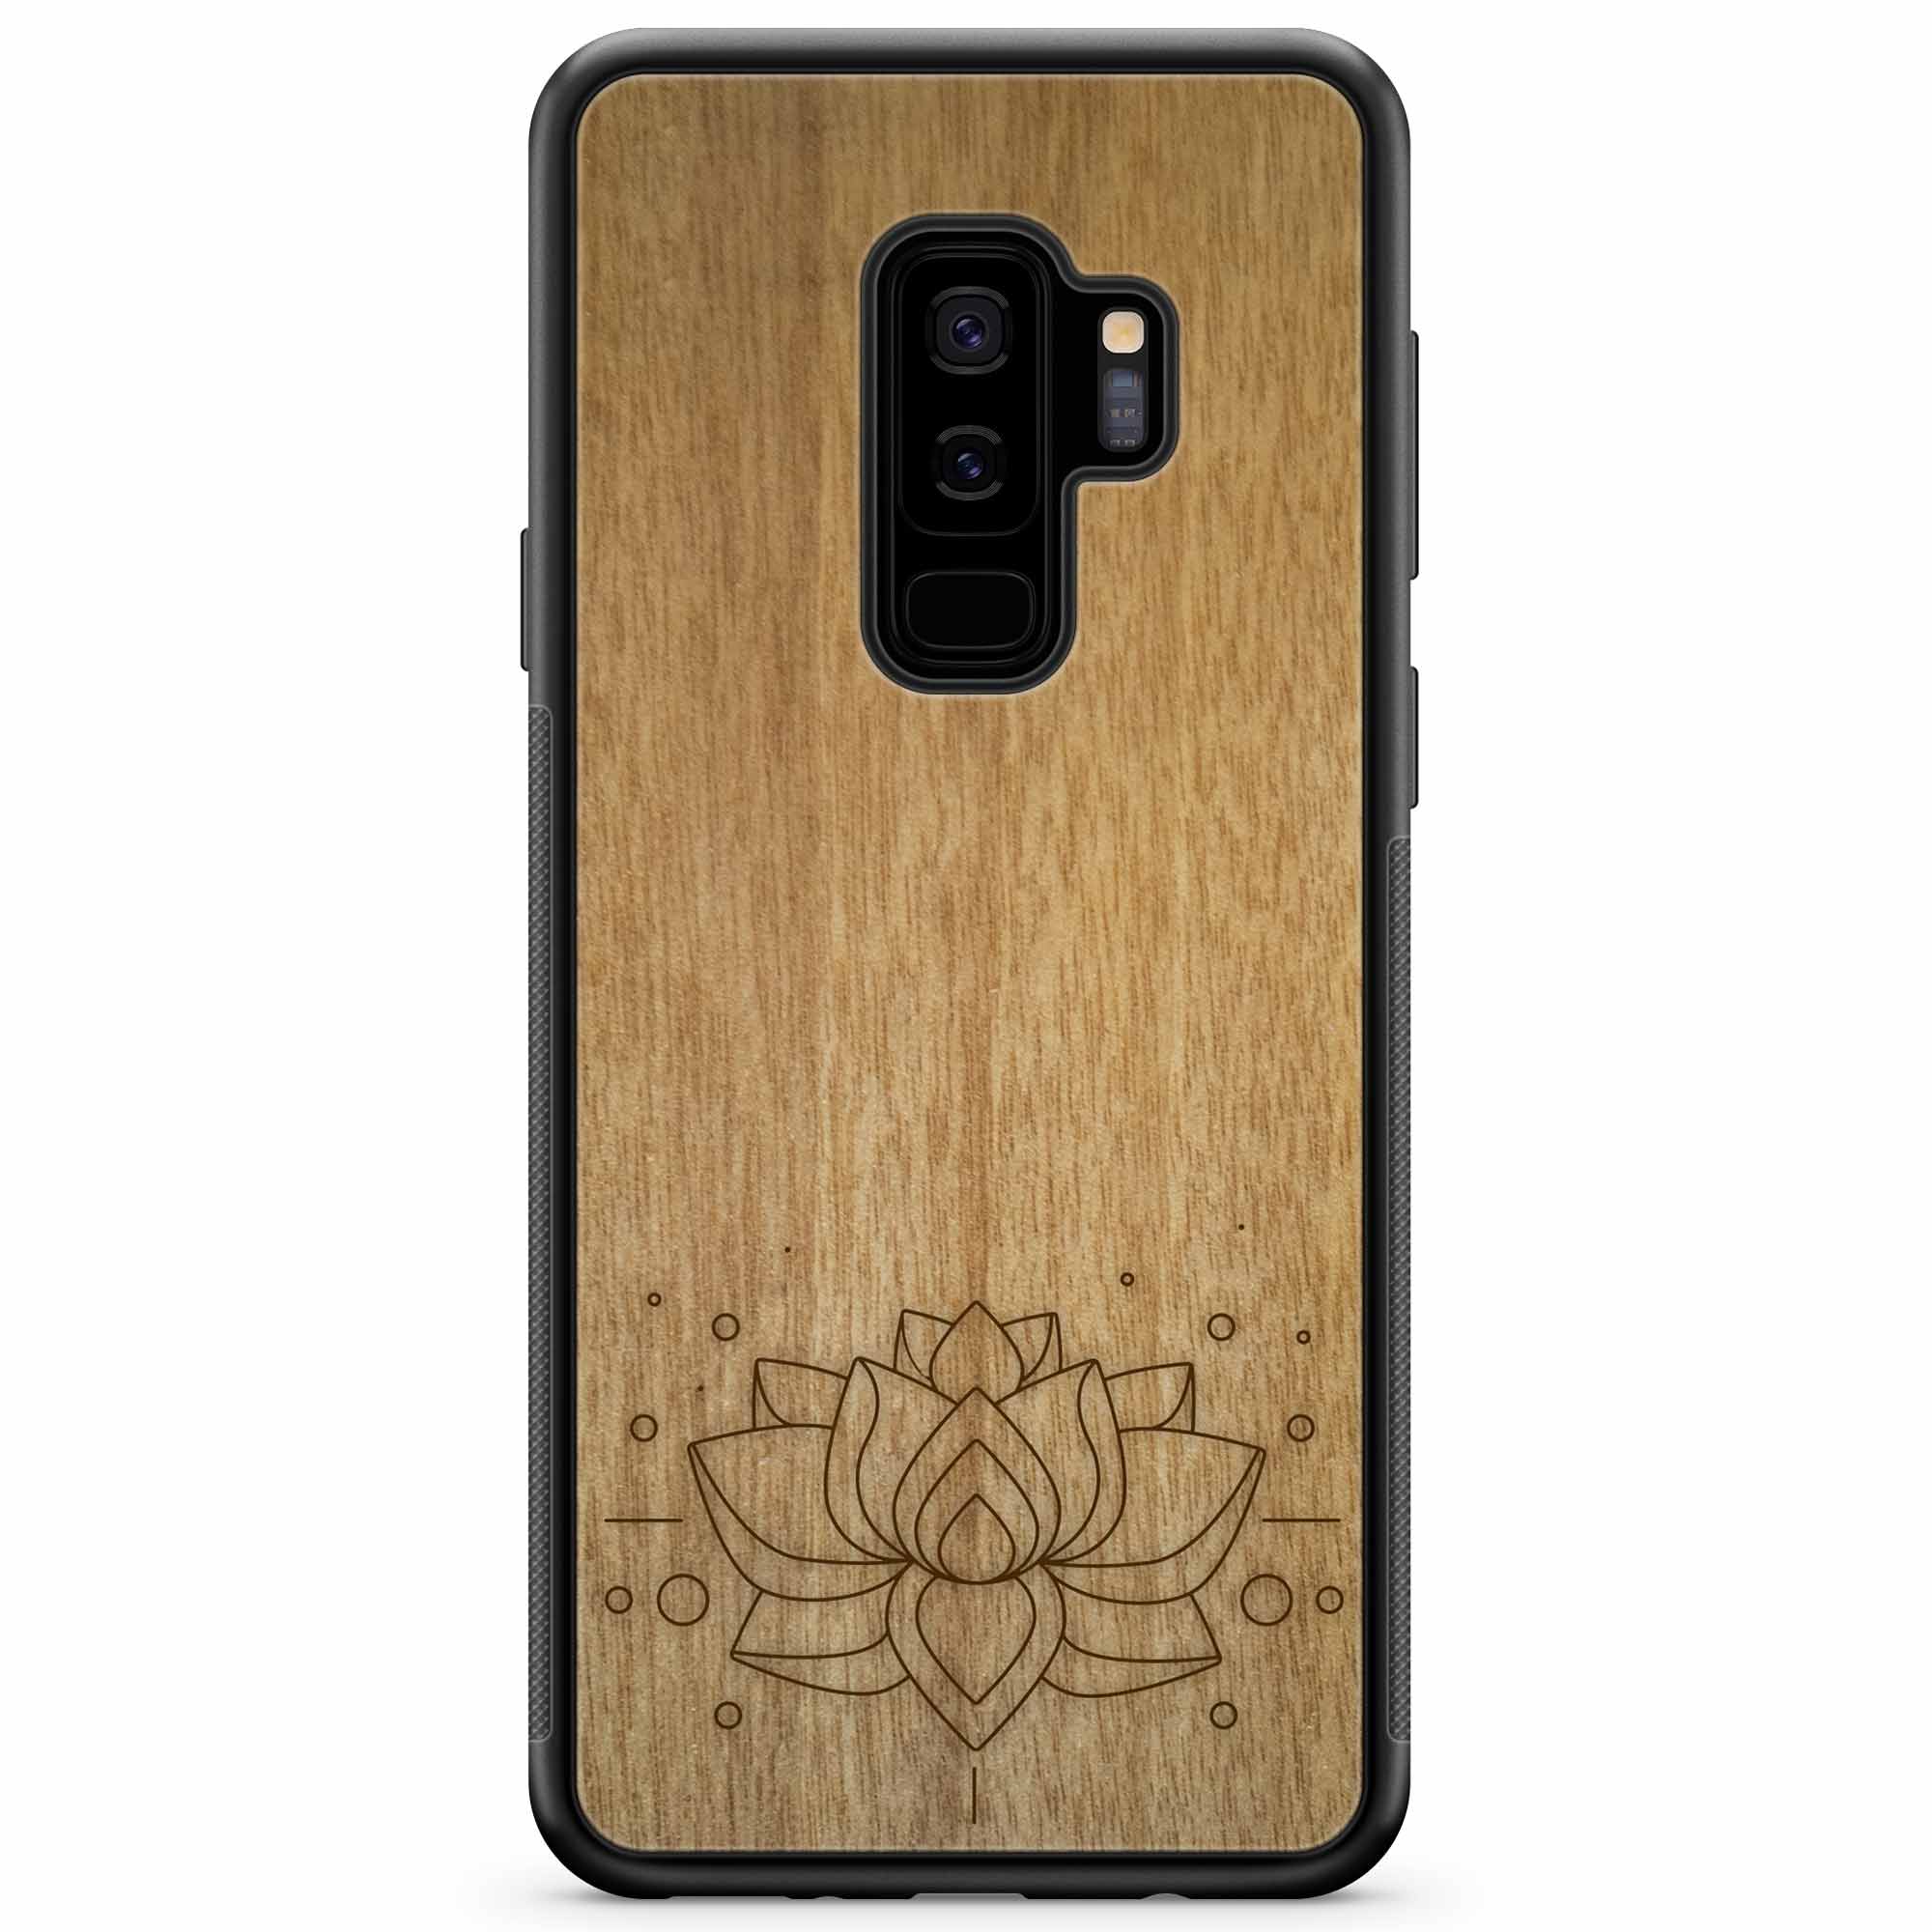 Engraved Lotus Samsung S9 Plus Wood Phone Case